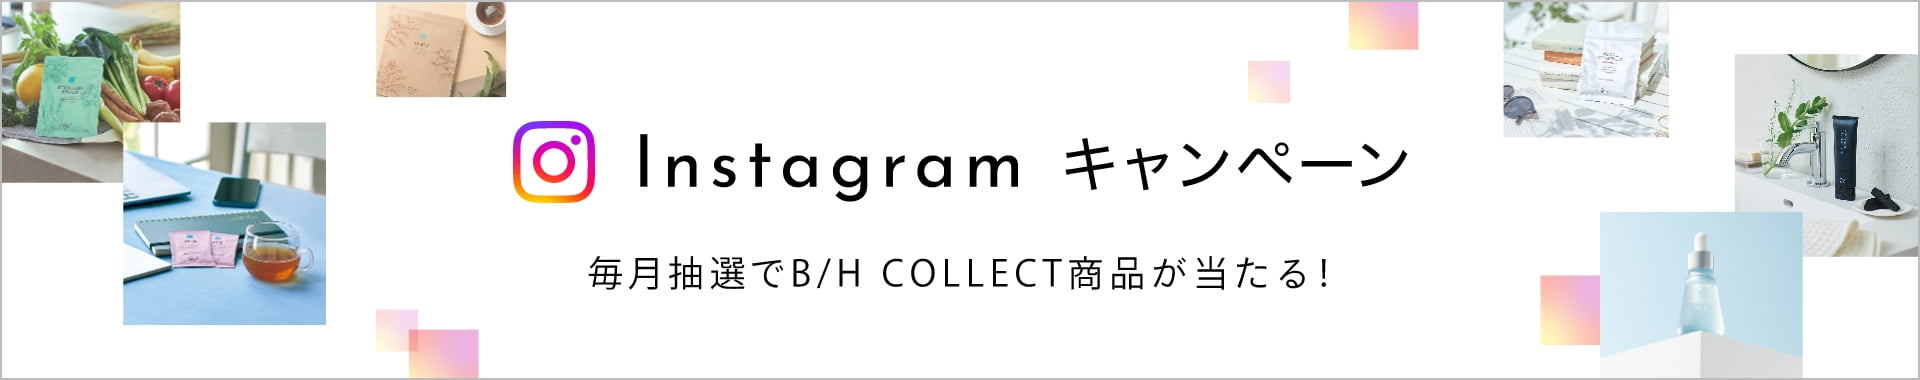 Instagram キャンペーン 毎月抽選でB/H COLLECT商品が当たる！